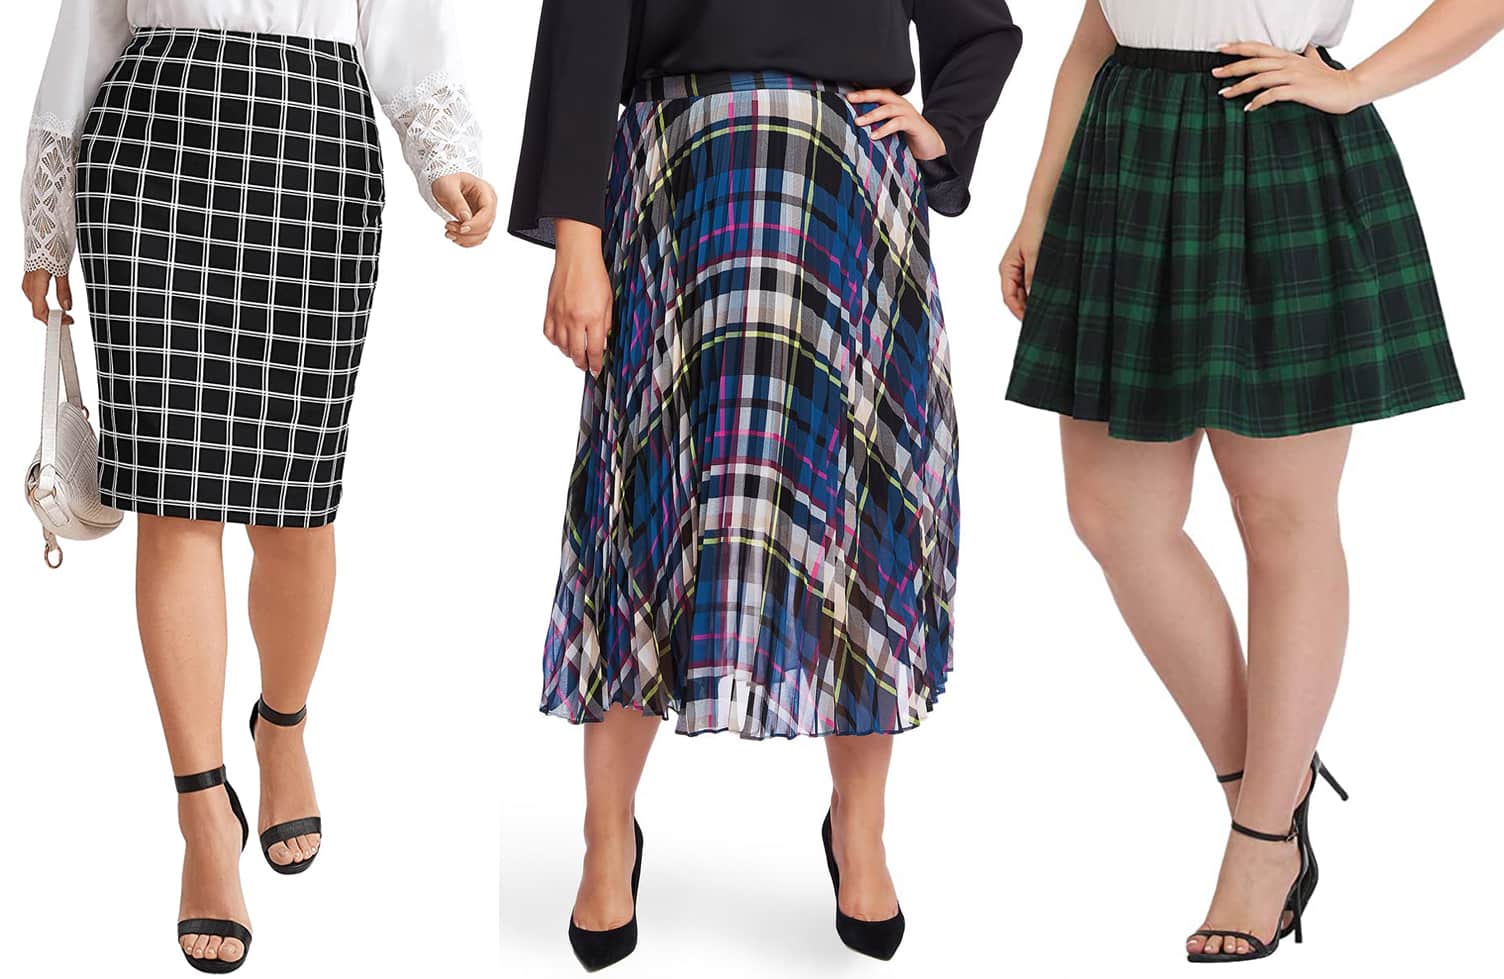 Floerns Women's Plus Size Plaid Bodycon Skirt; Vince Camuto Plaid Pleated Midi Skirt; HDE Plus Size Plaid Mini Skater Skirt